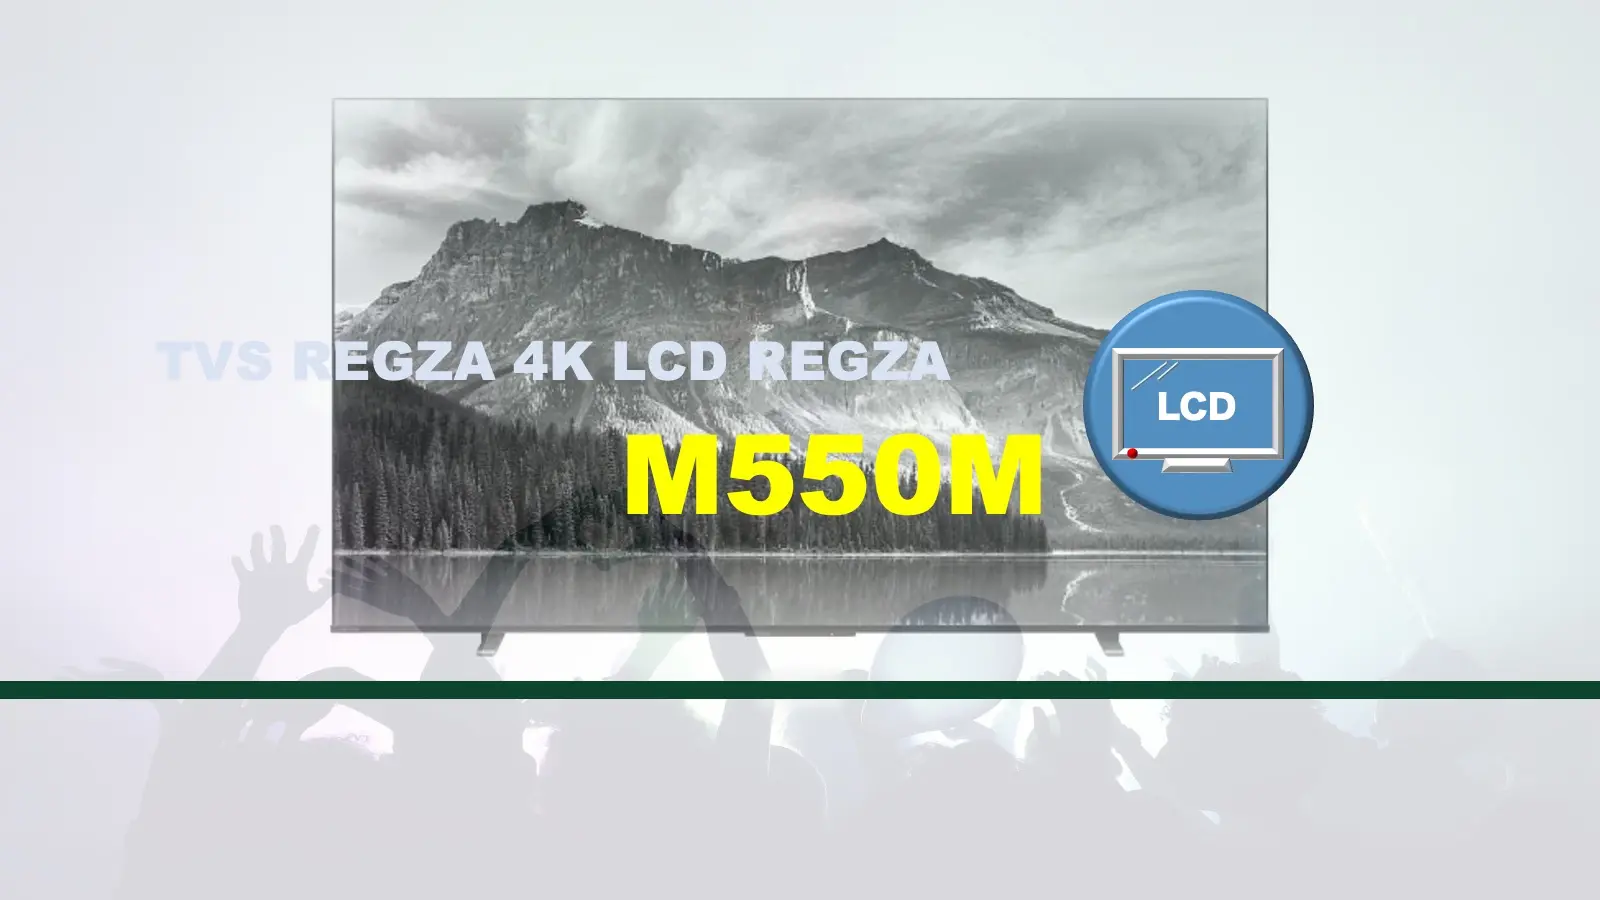 TVS-REGZA 4K液晶レグザ M550Mに最適なテレビスタンド紹介記事のアイキャッチャー